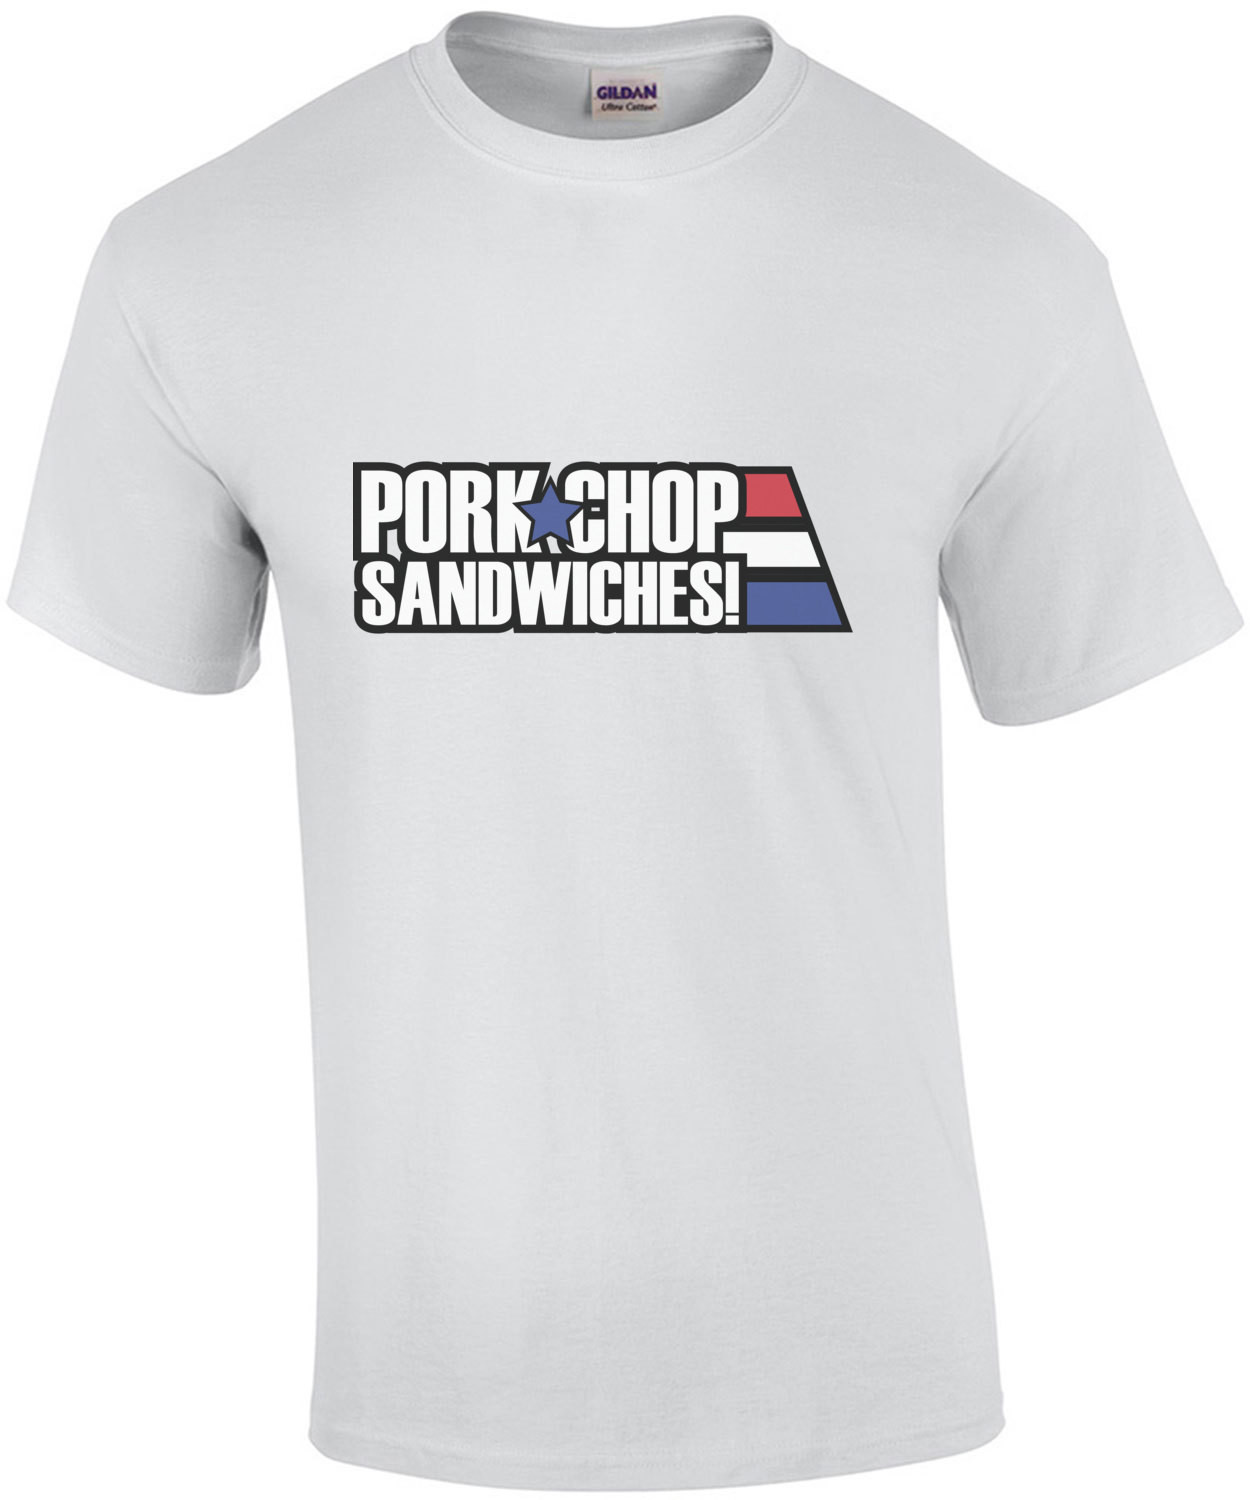 Pork Chop Sandwiches - Funny T-Shirt